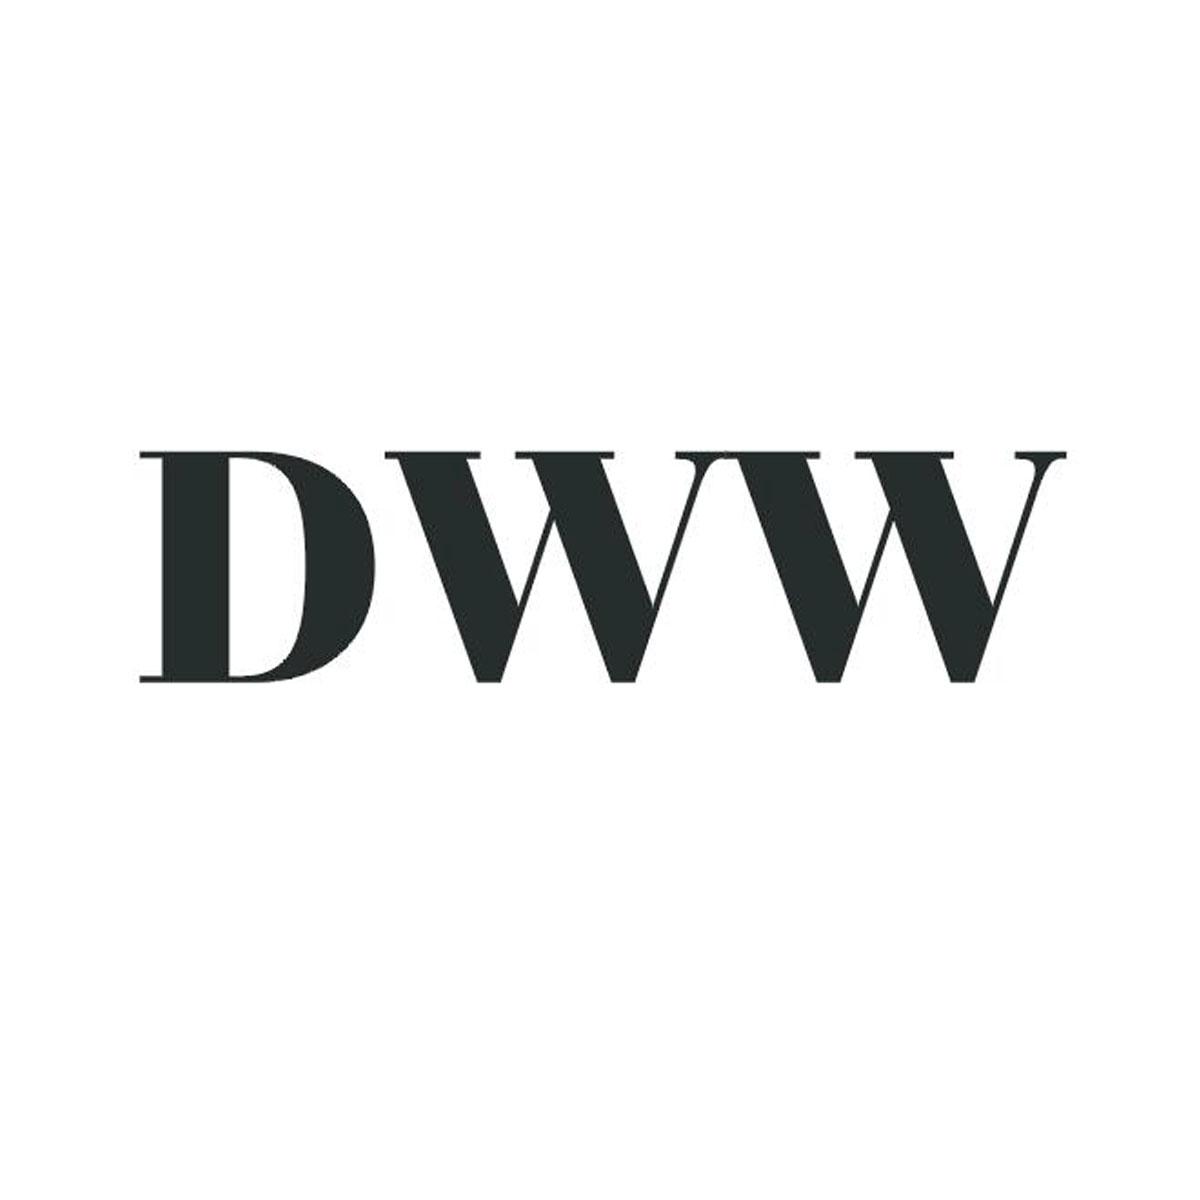 DWW手机套商标转让费用买卖交易流程